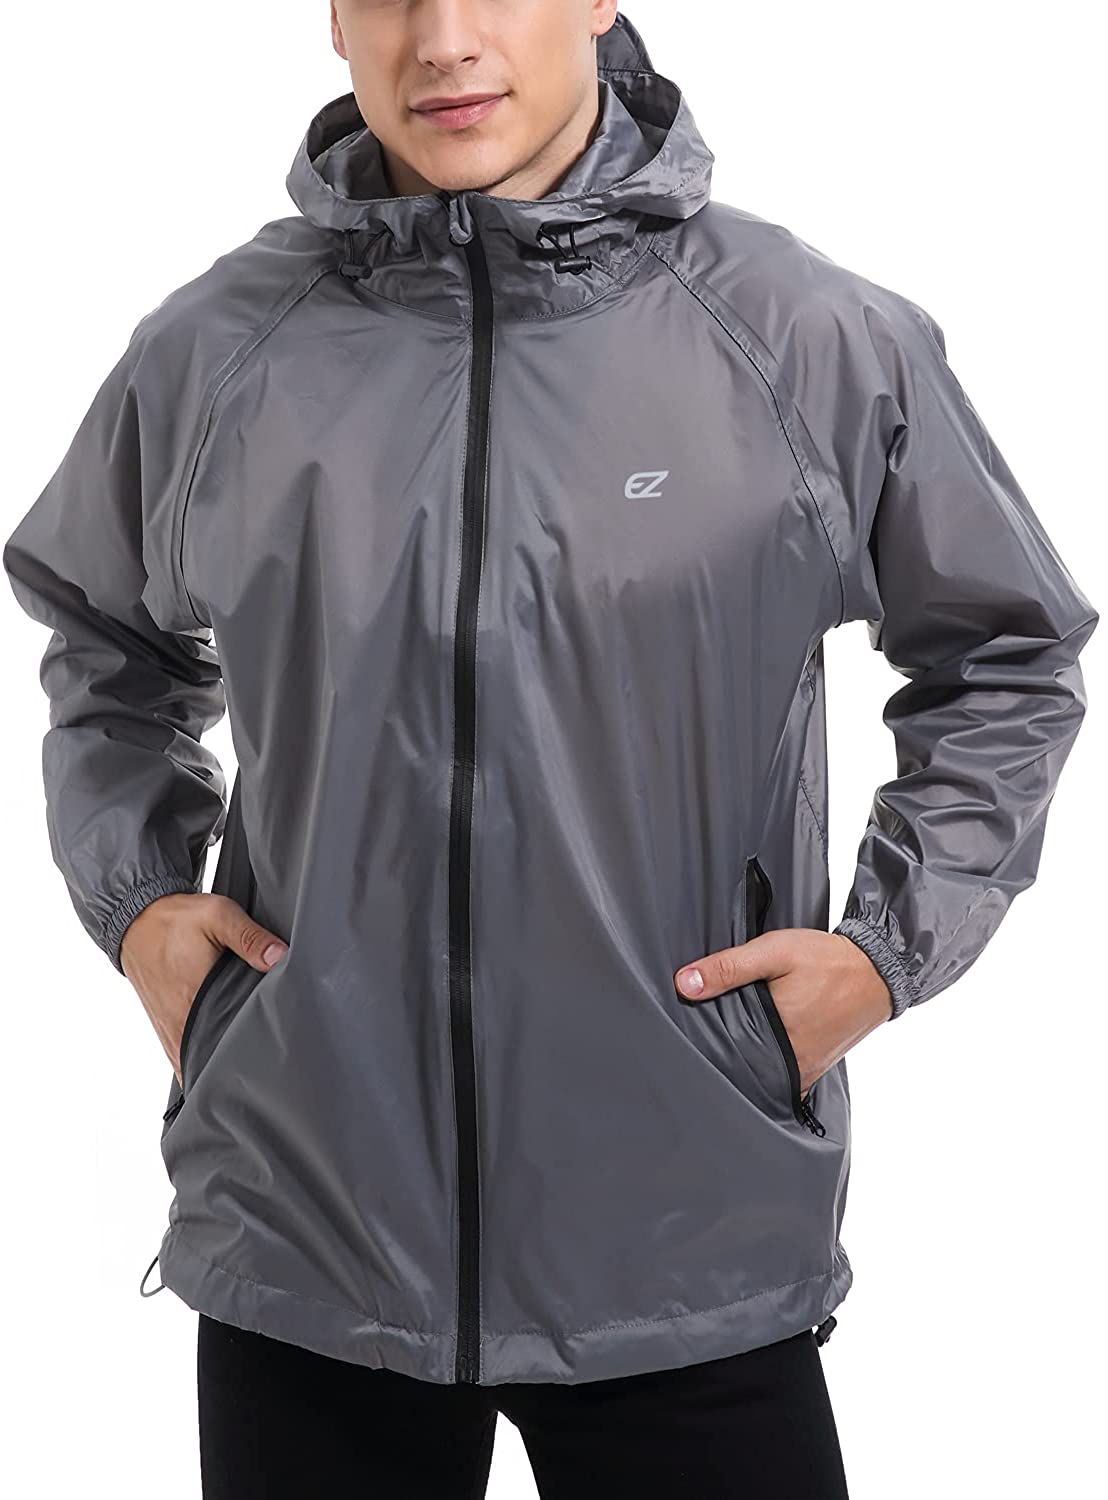 USHARESPORTS Rain Jackets for Men Waterproof Rain Coat with Hood Windbreaker Lightweight Packable 